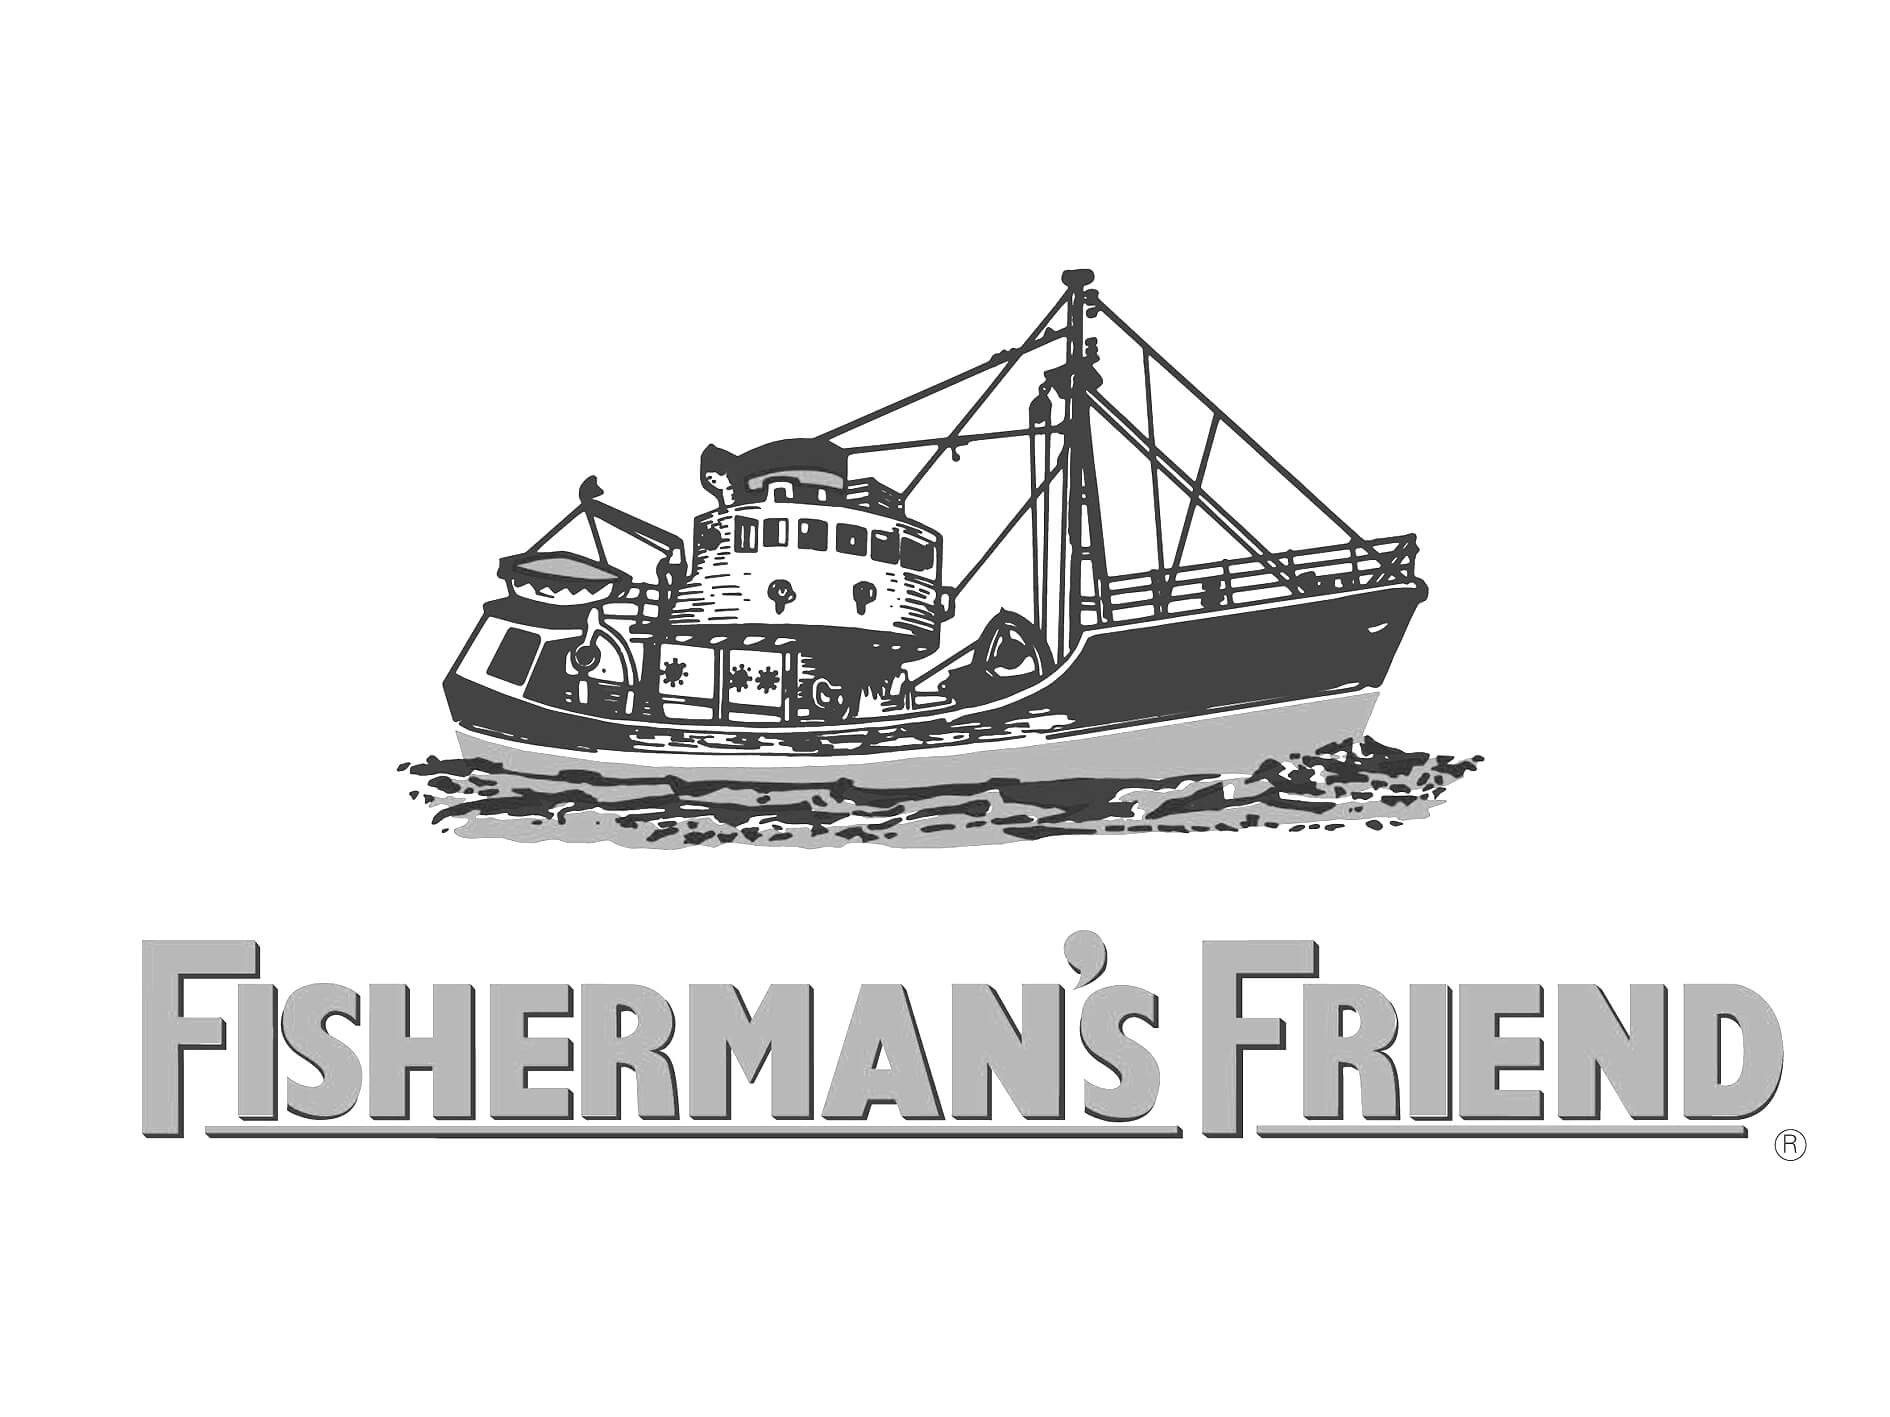 Fishermans Friend